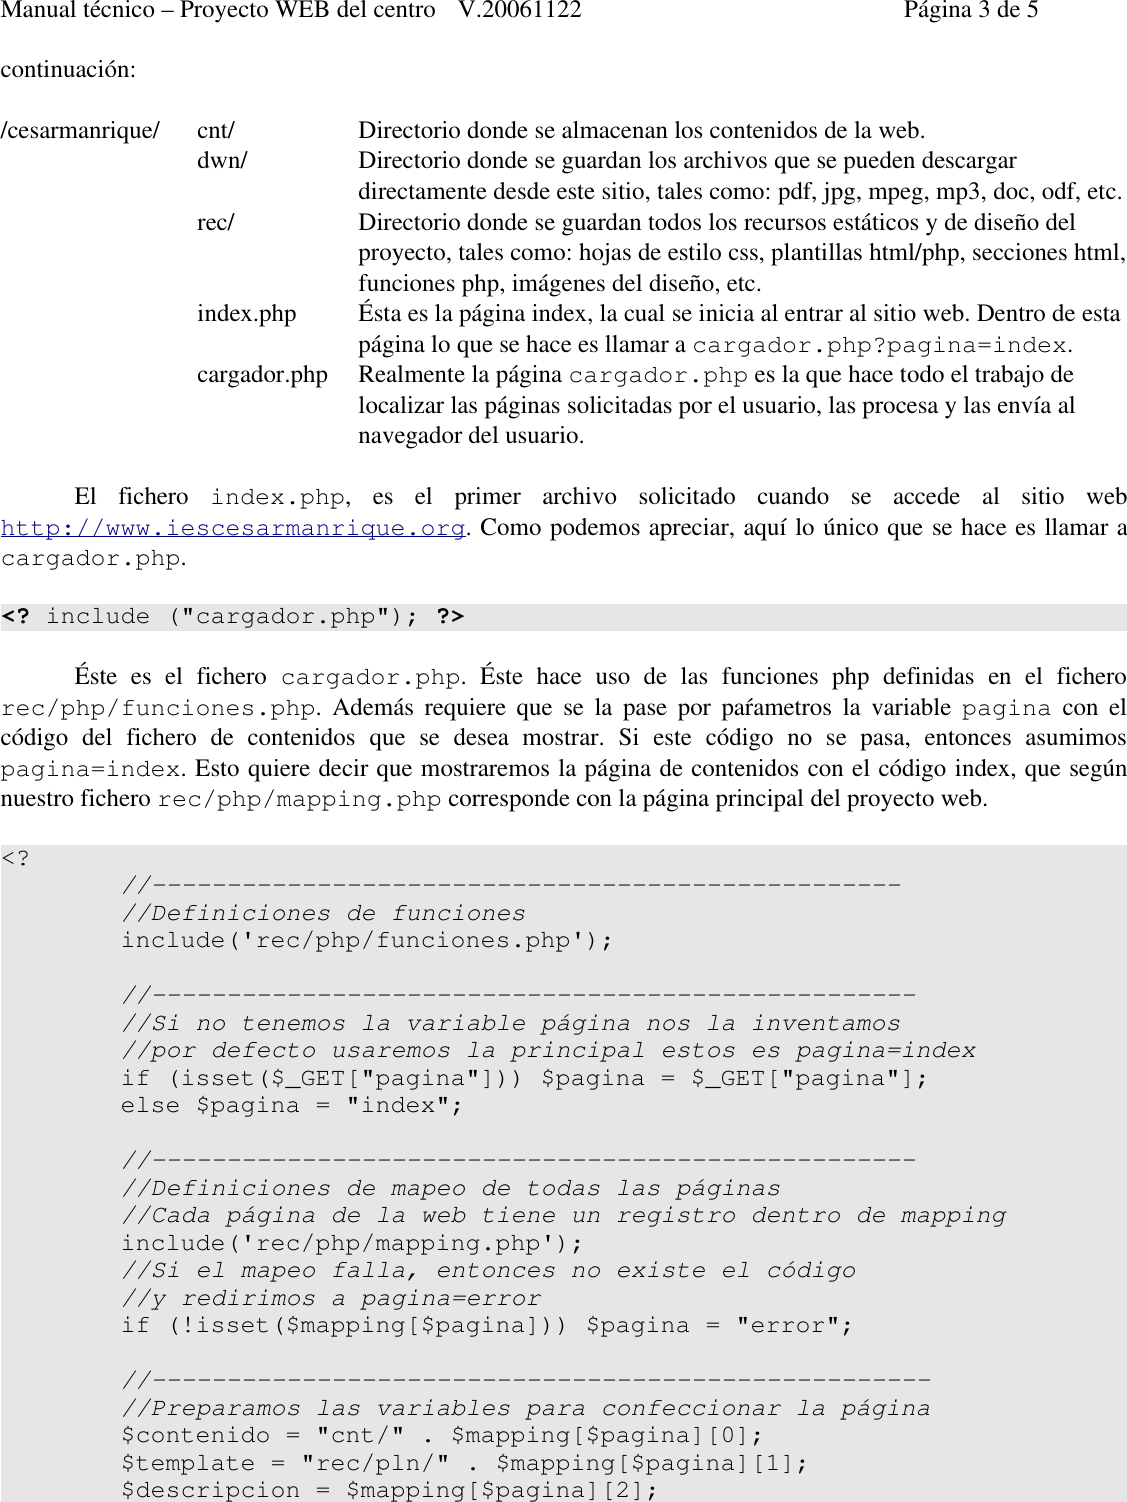 Page 3 of 5 - Manual Tecnico Web